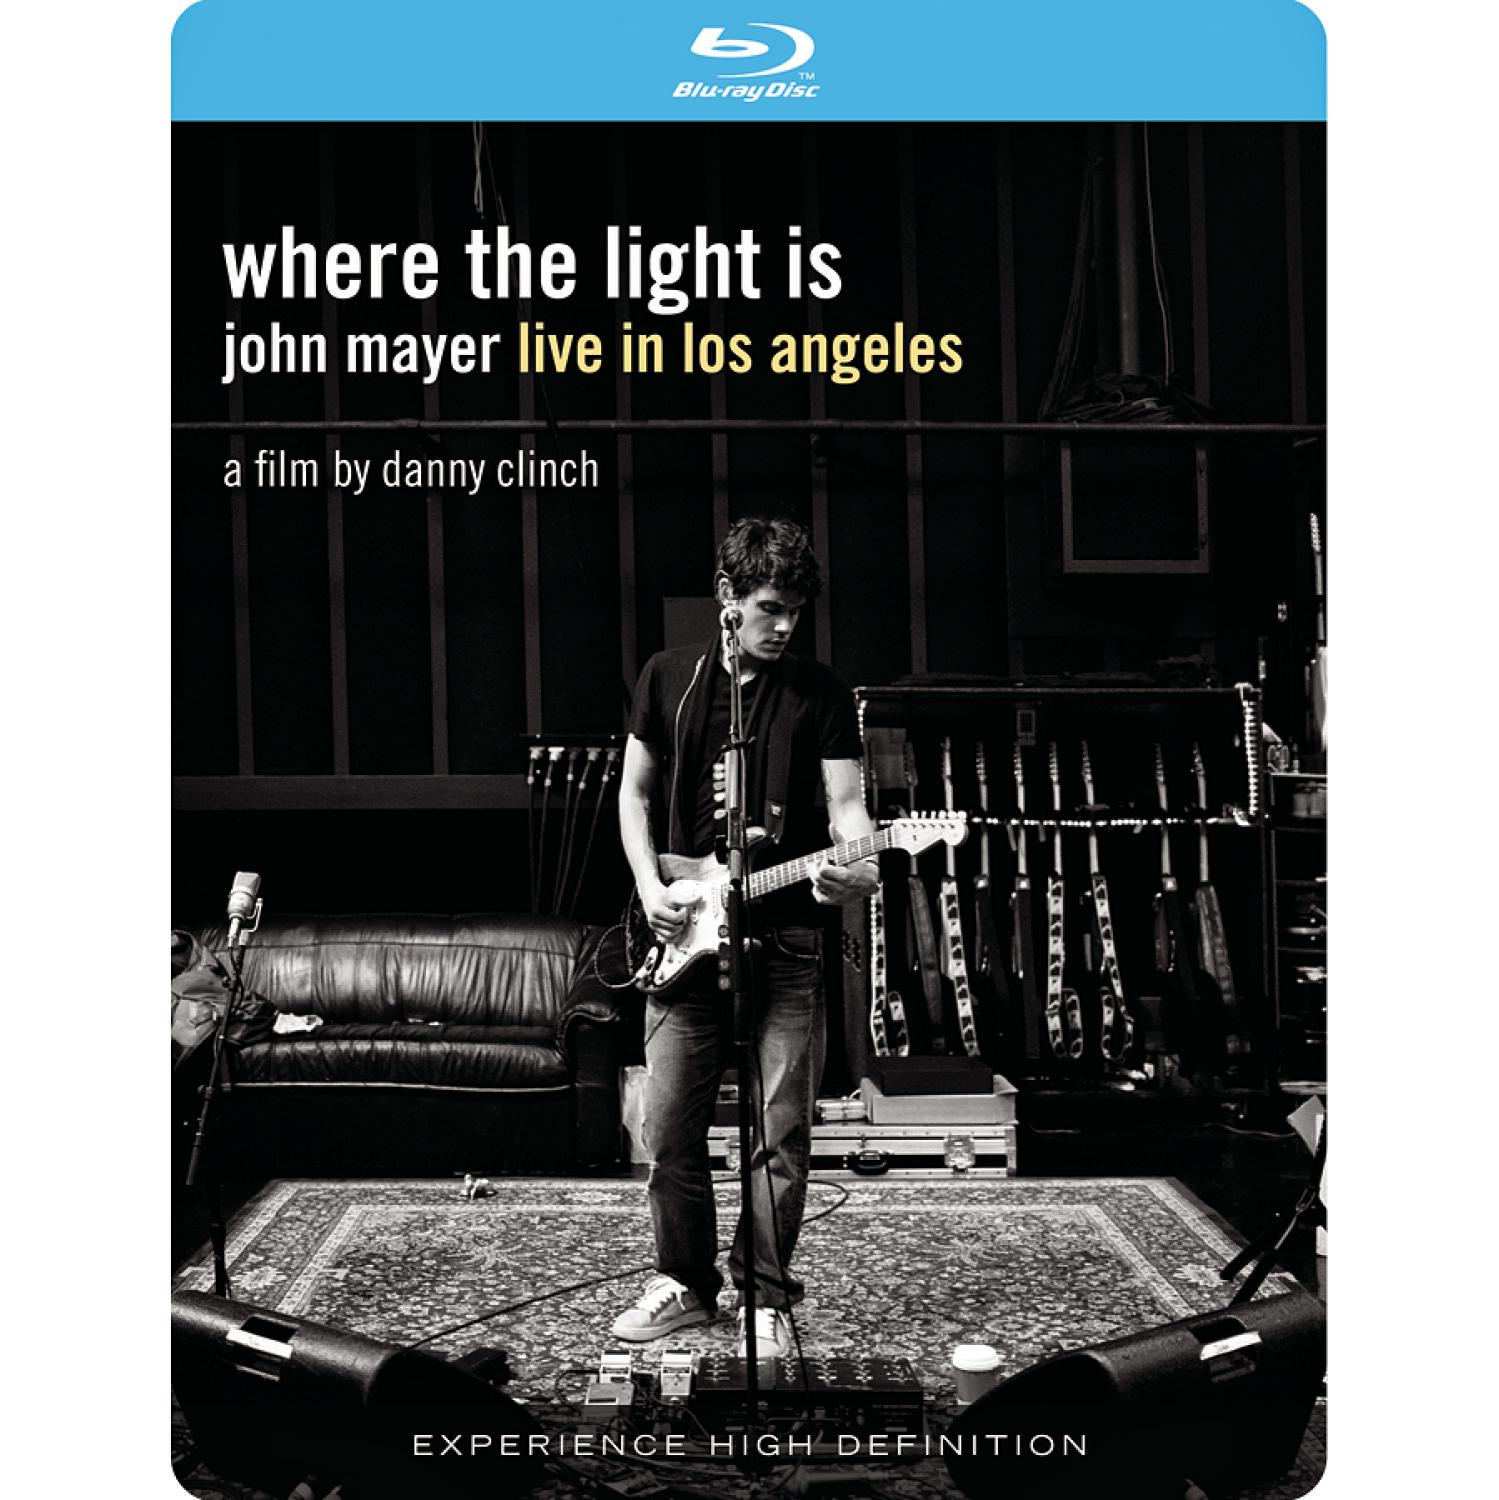 John Mayer - WHERE LIGHT LOS (Blu-ray) IS THE LIVE - - JOHN ANGELE MAYER IN